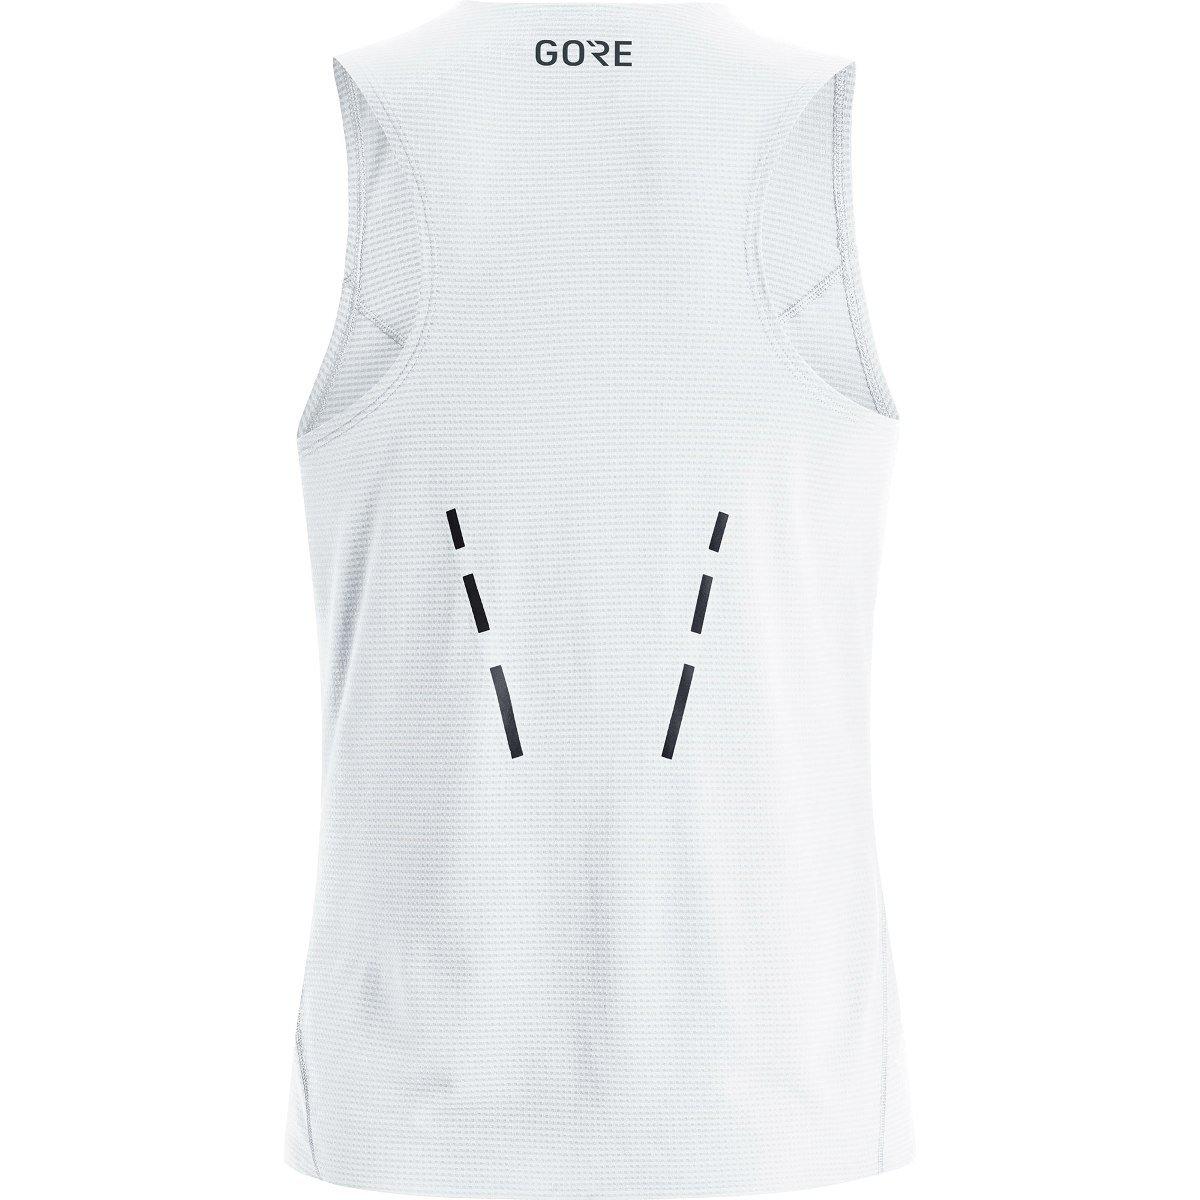 Gore Wear Contest Singlet White-Runster